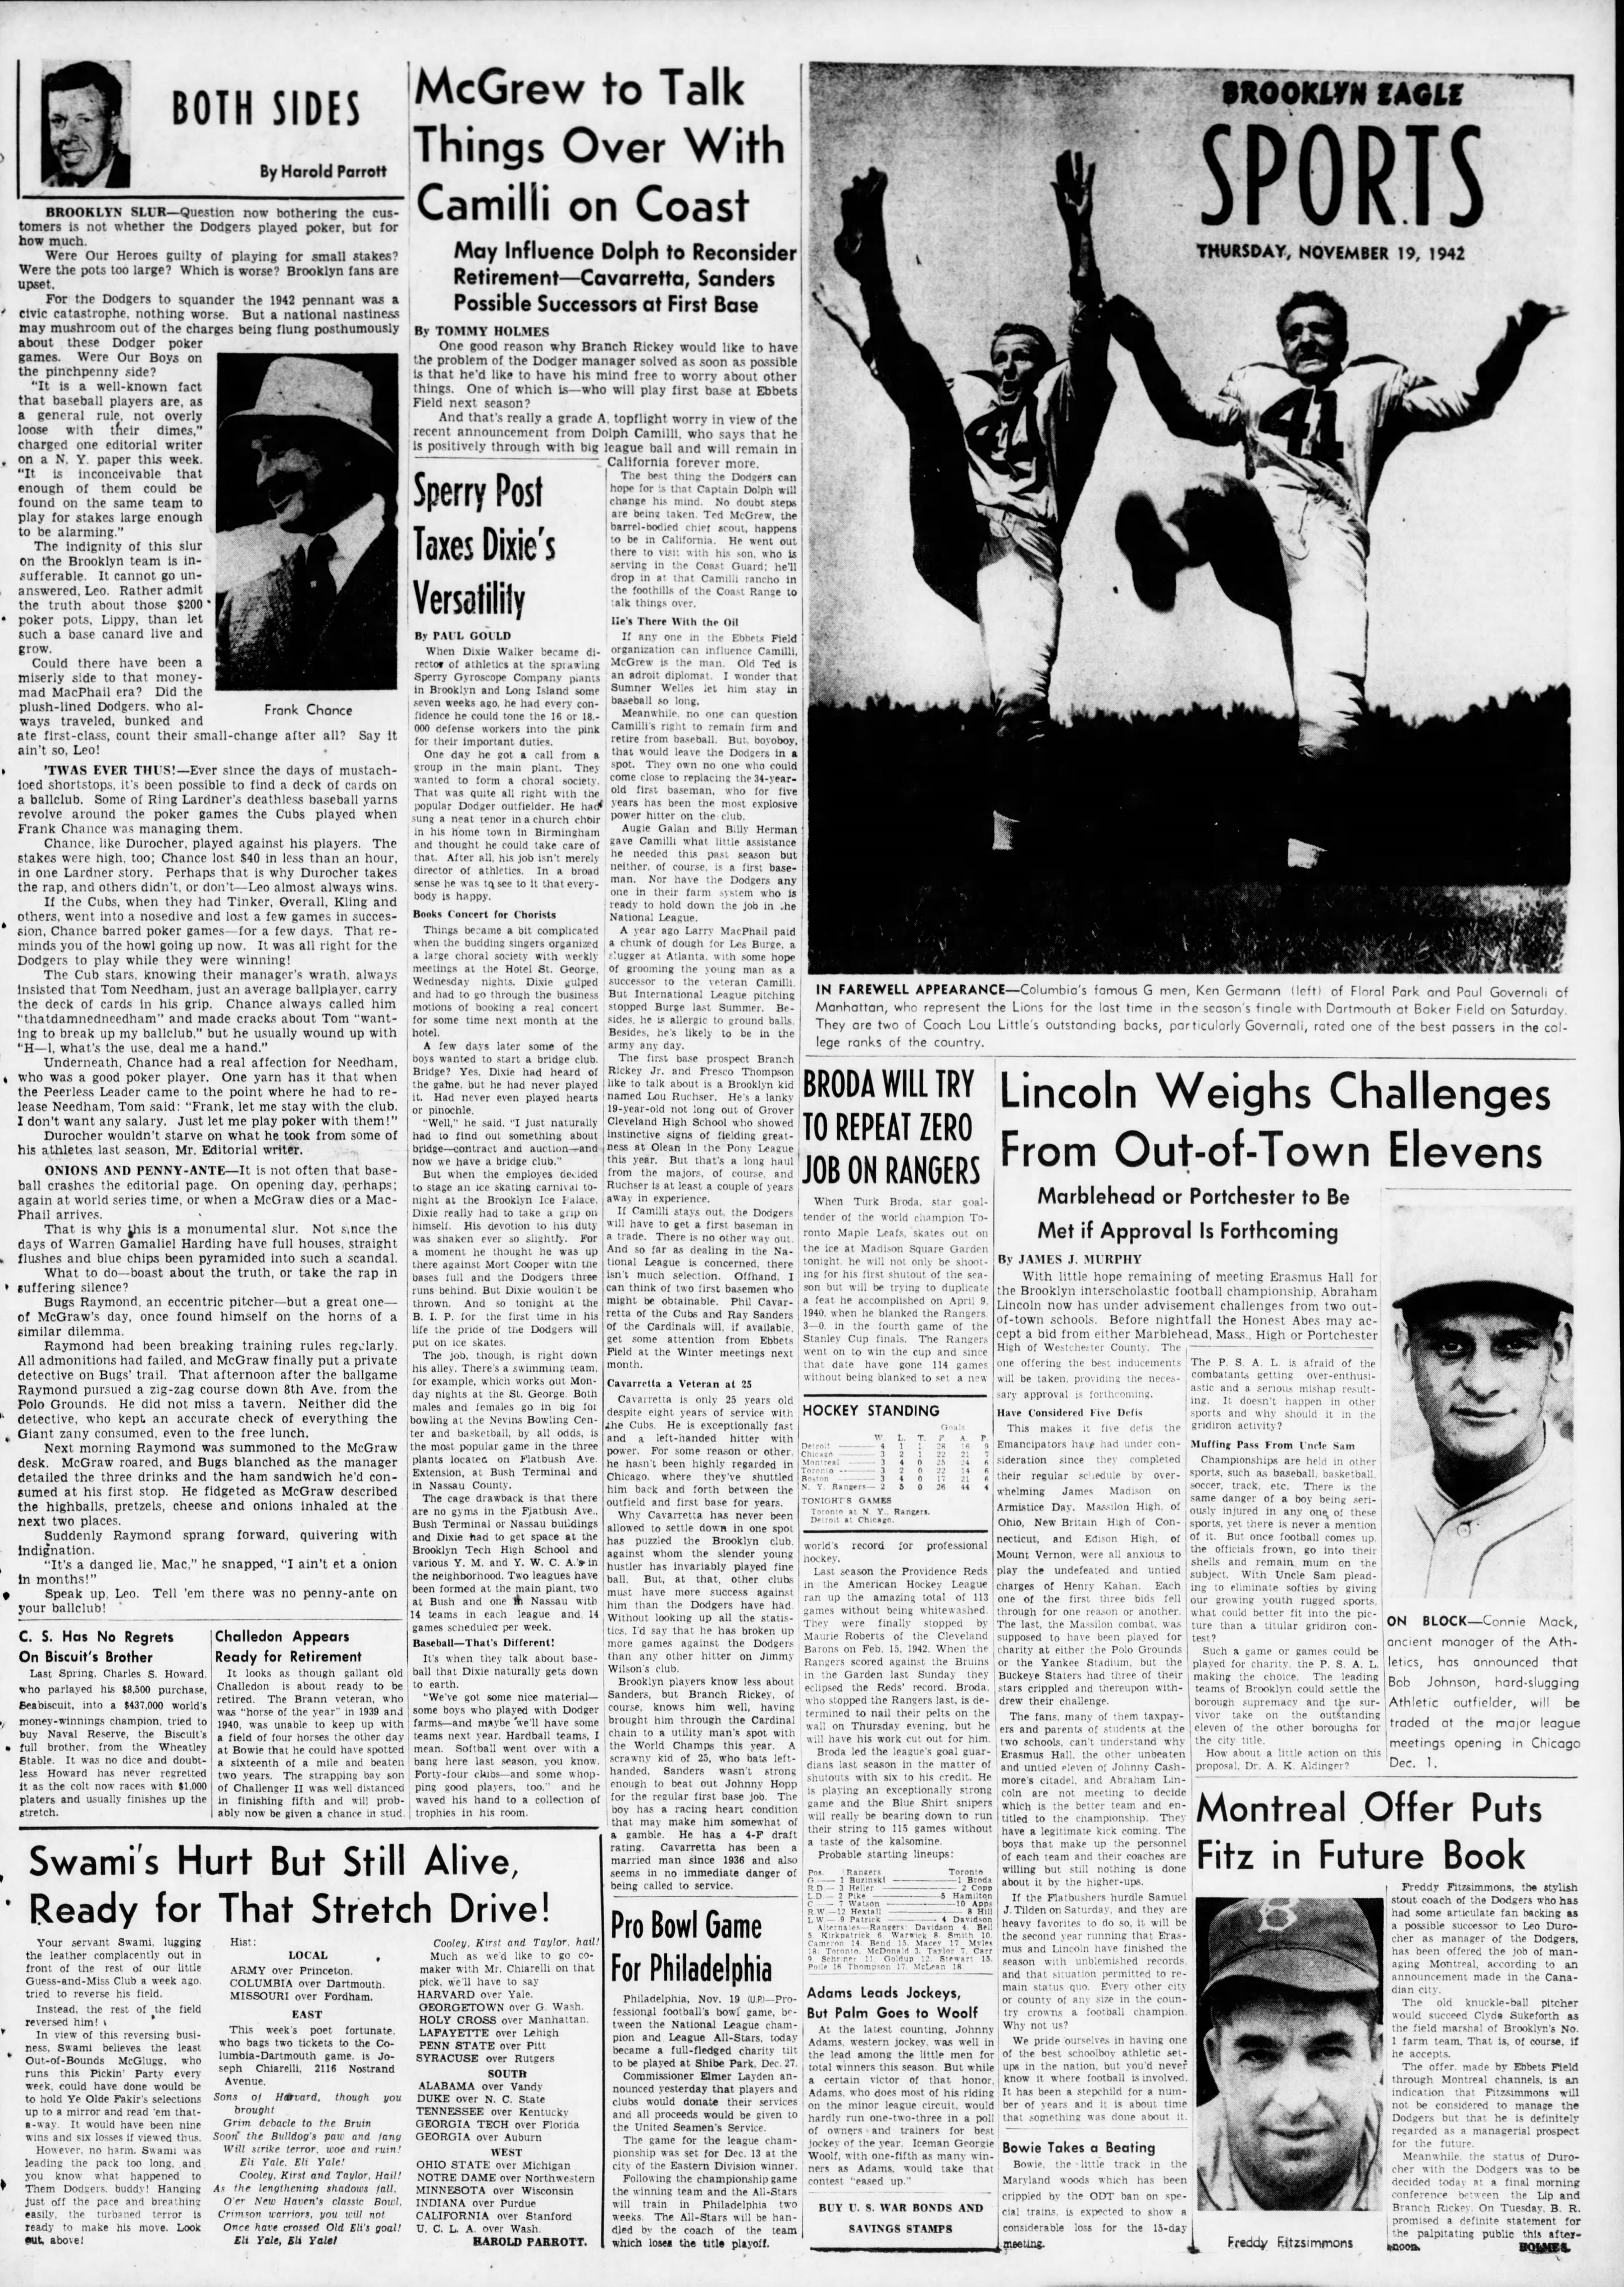 The_Brooklyn_Daily_Eagle_Thu__Nov_19__1942_(5).jpg